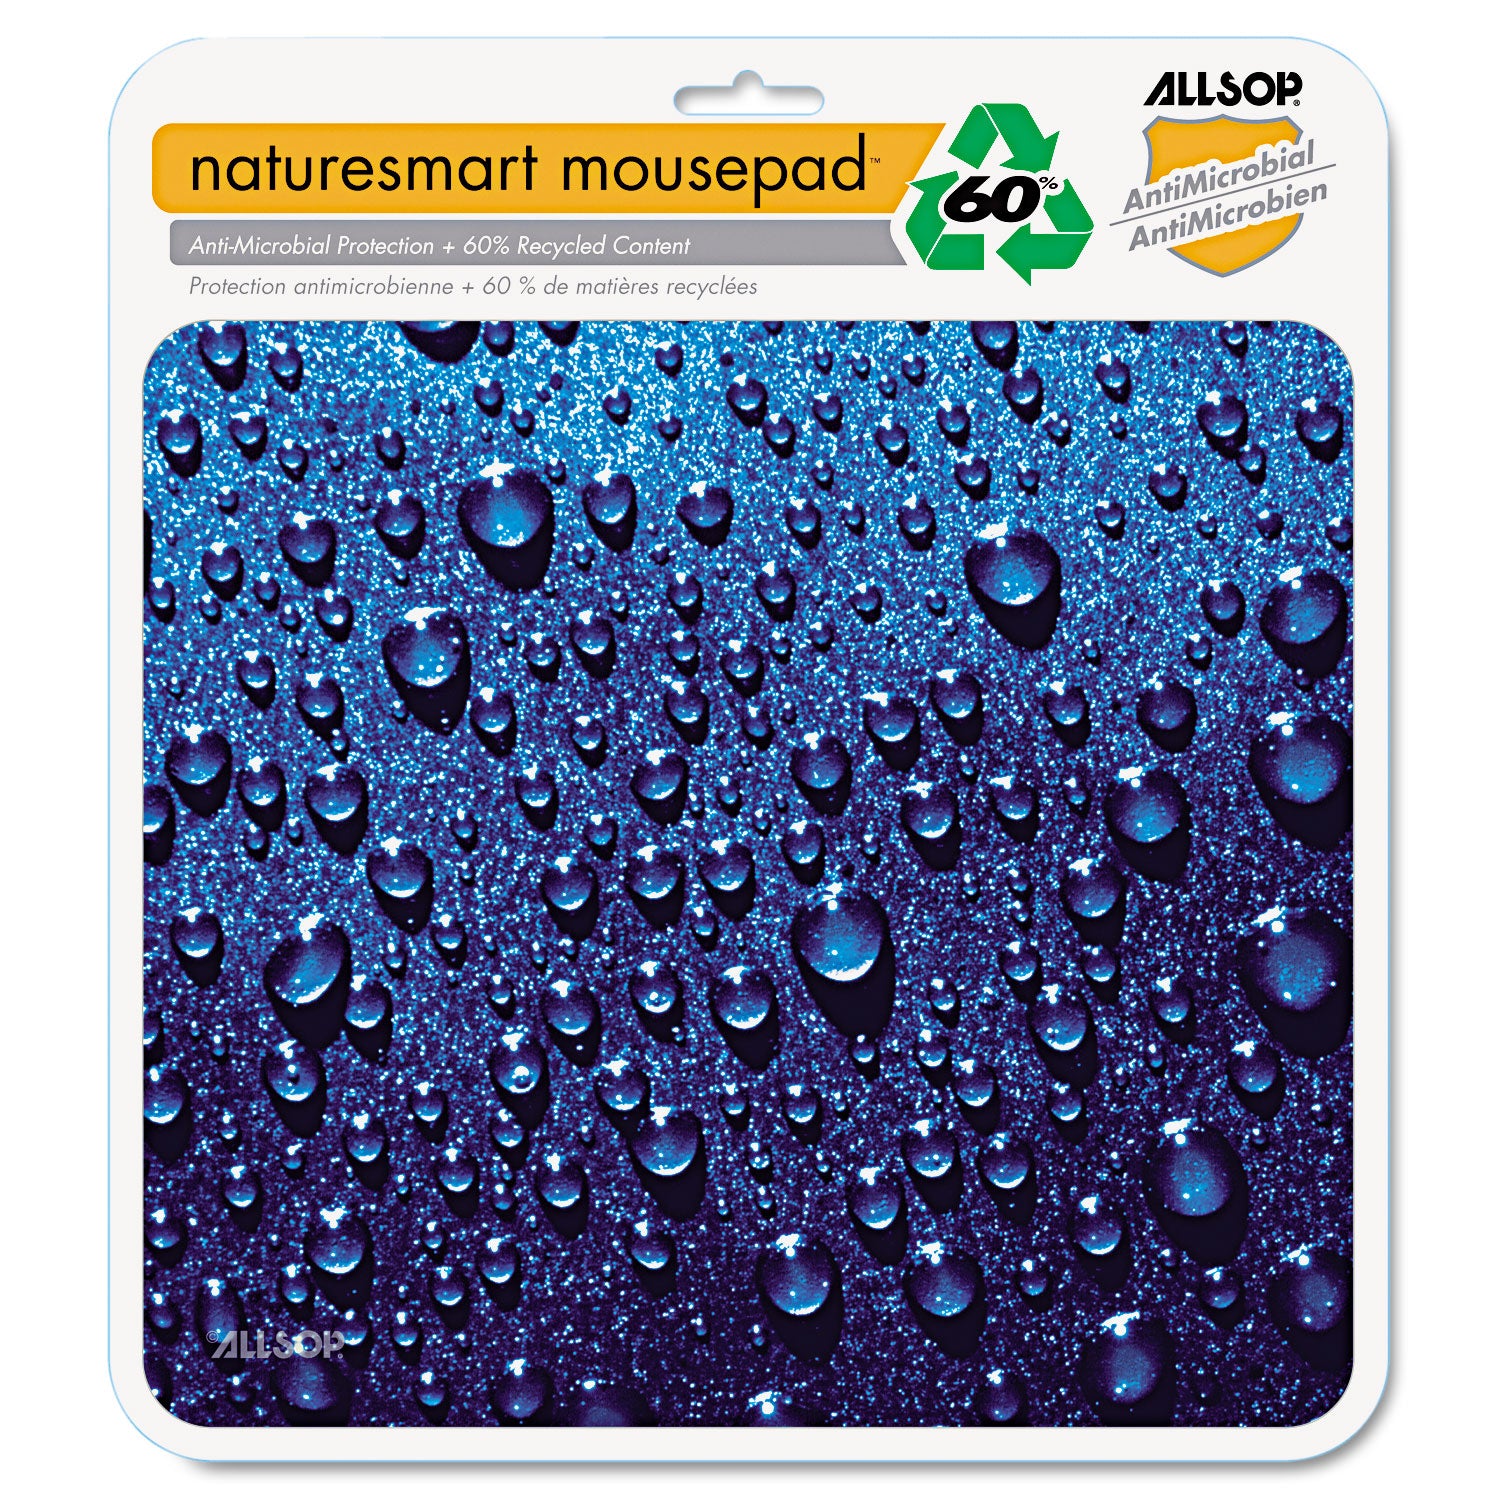 Naturesmart Mouse Pad, 8.5 x 8, Raindrops Design - 